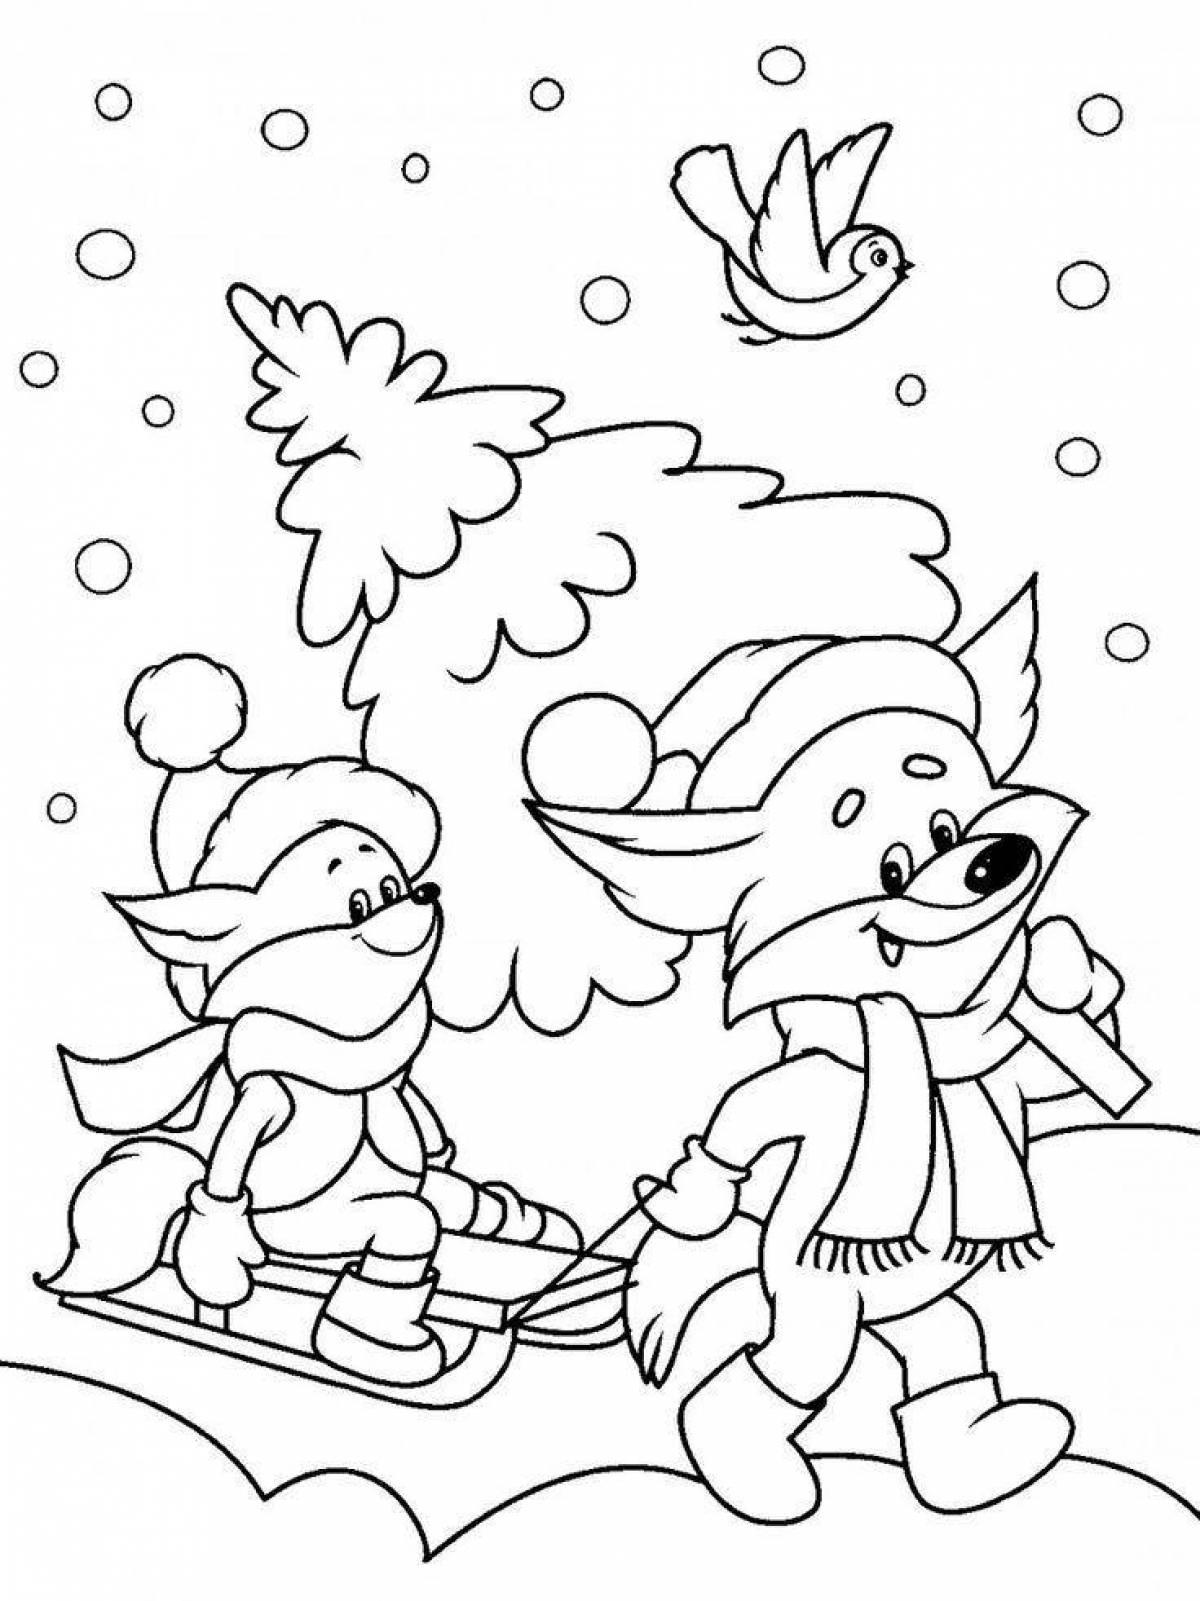 Magic winter coloring book for kids